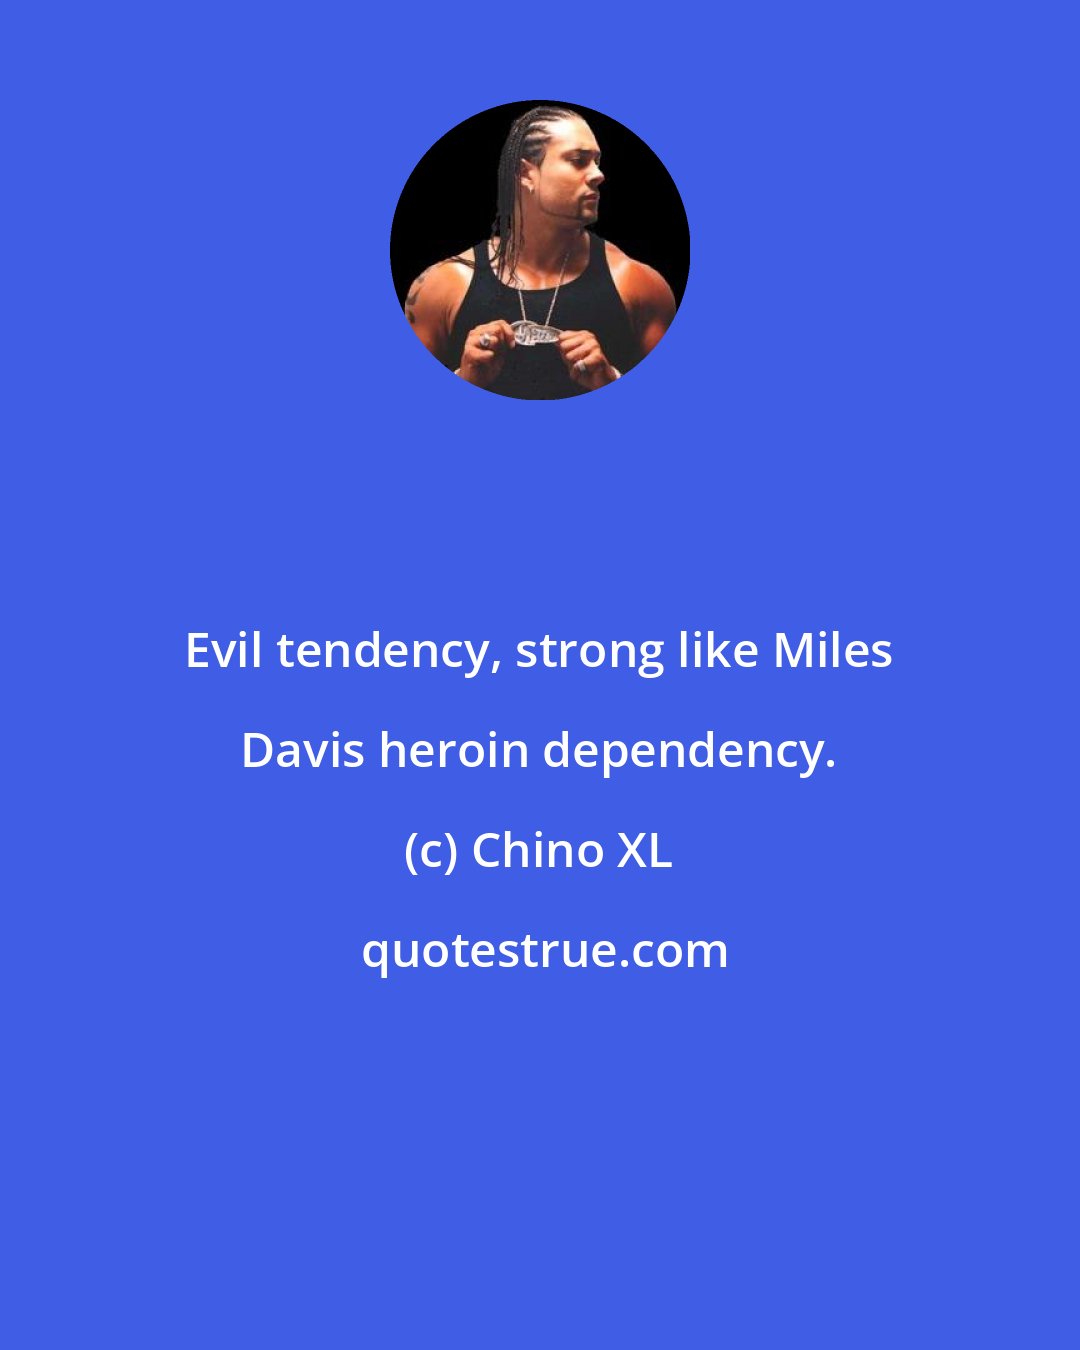 Chino XL: Evil tendency, strong like Miles Davis heroin dependency.